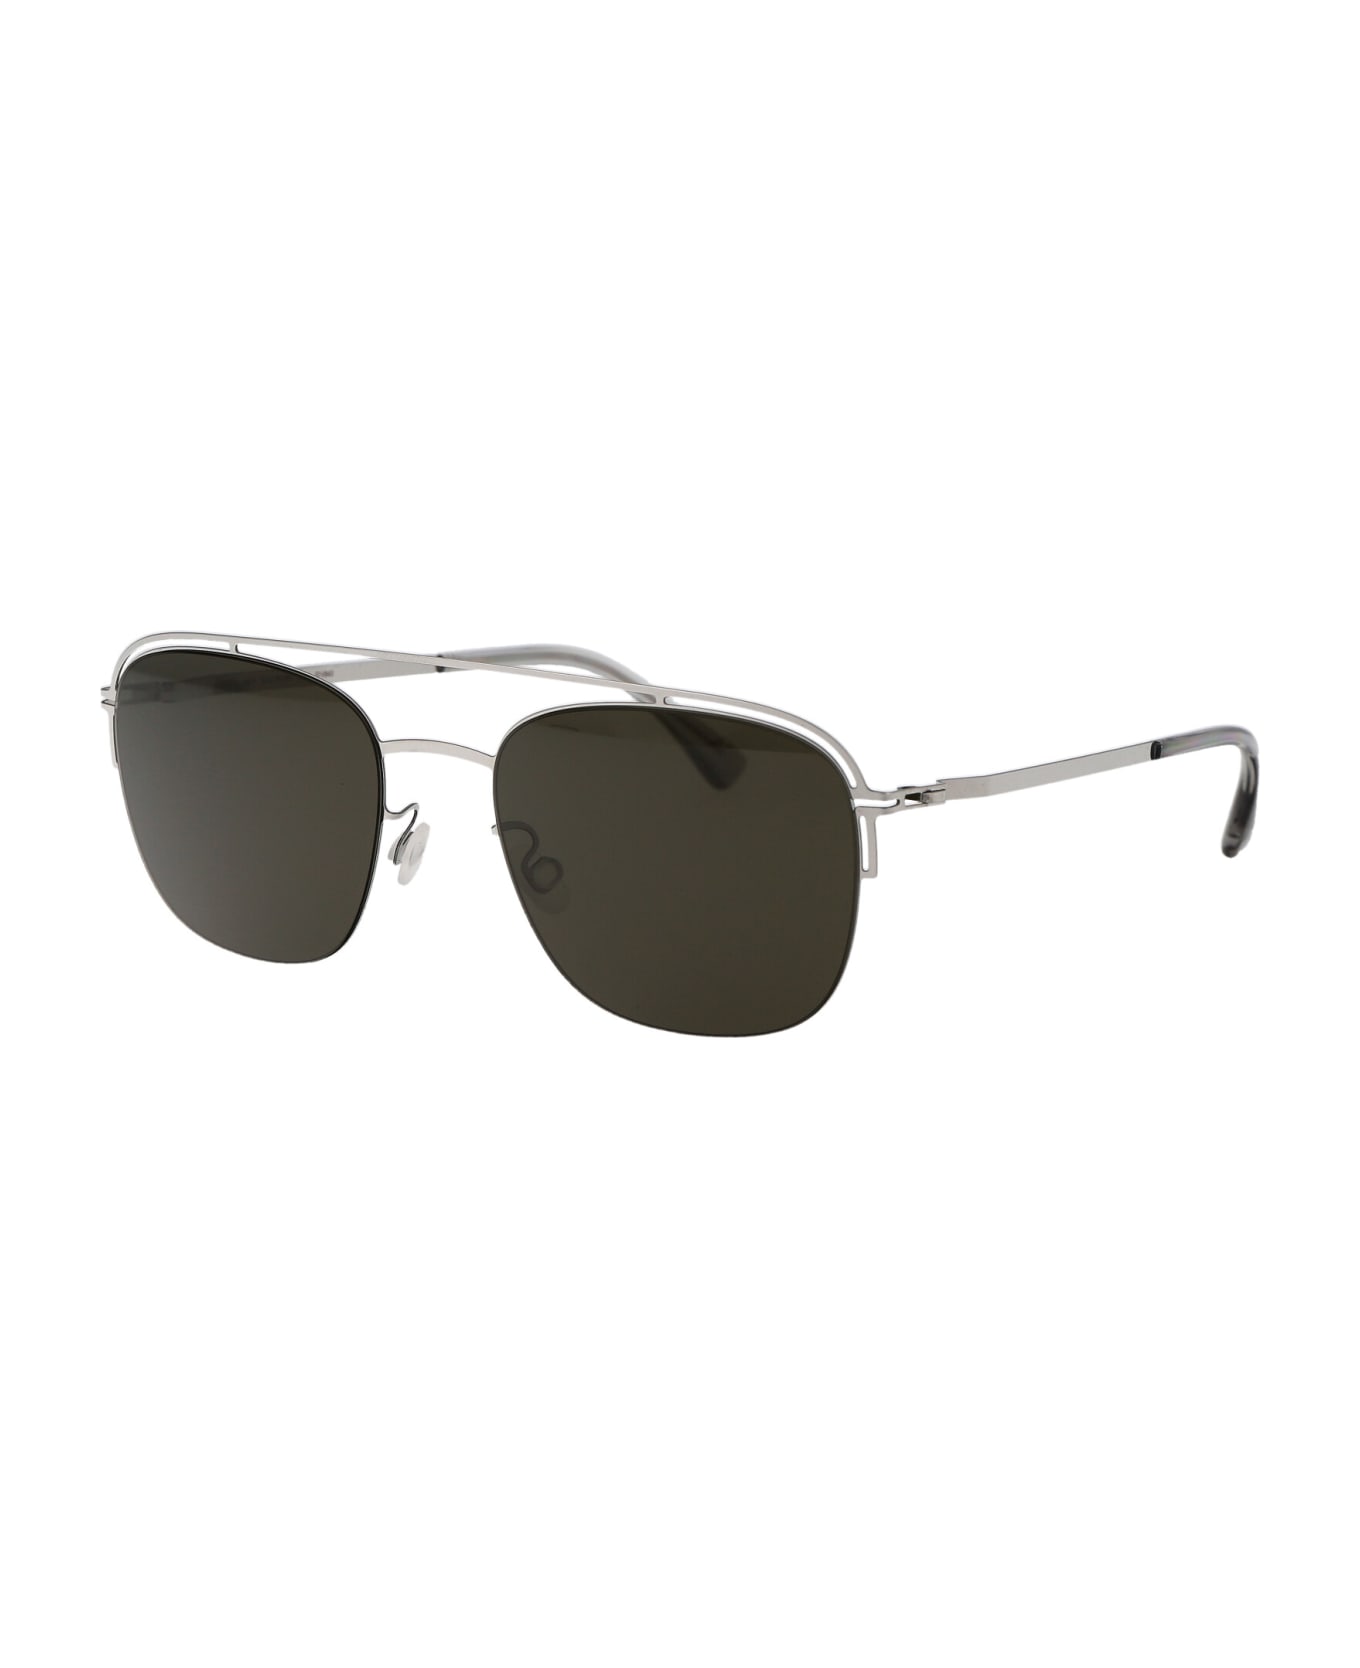 Mykita Nor Sunglasses - 051 Shiny Silver Raw Green Solid サングラス